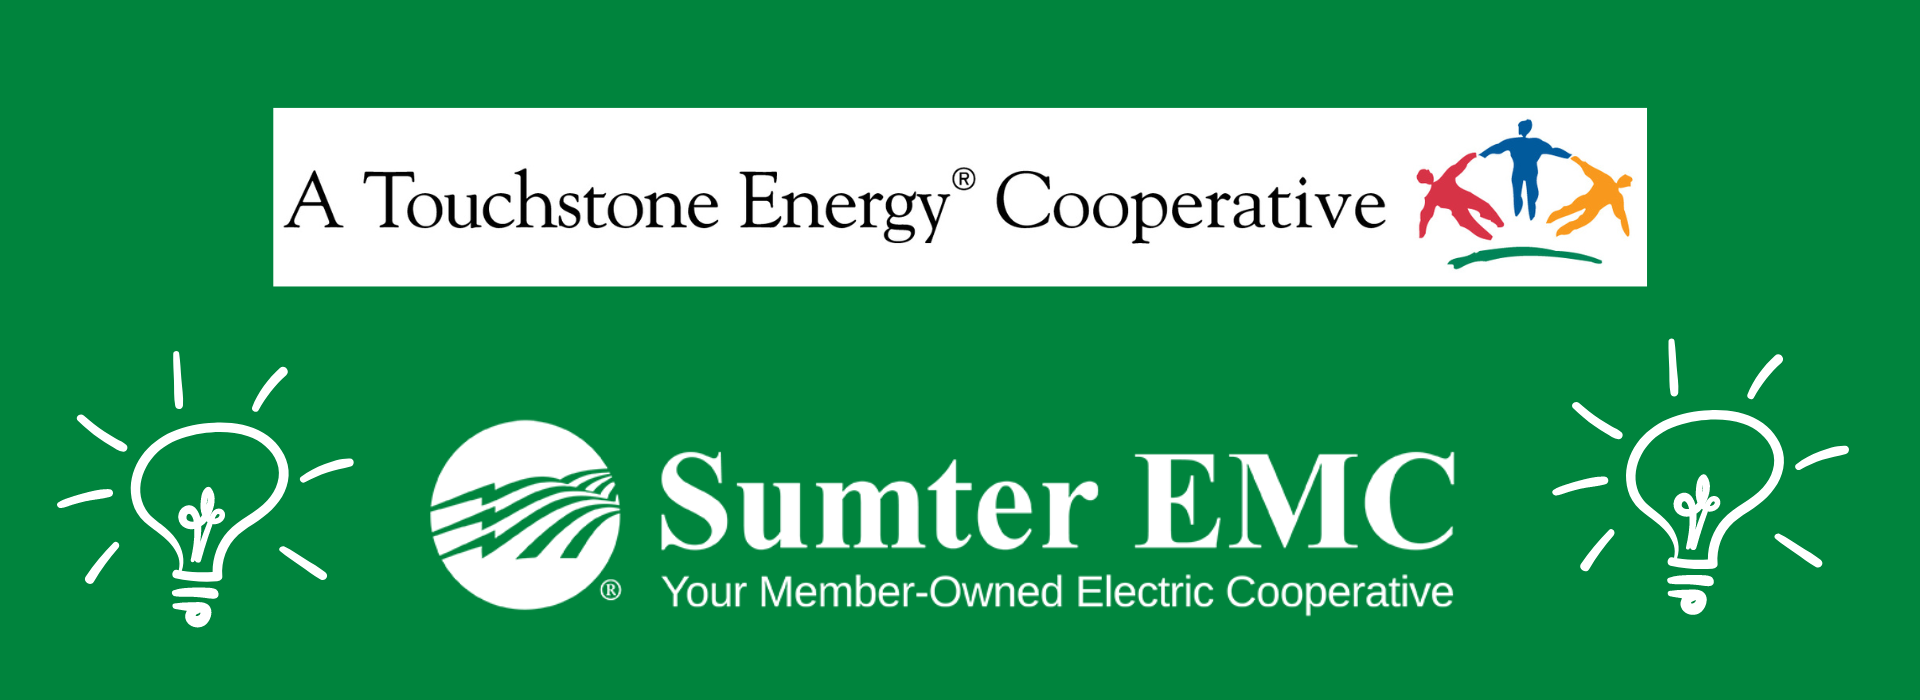 touchstone-energy-cooperatives-sumter-emc